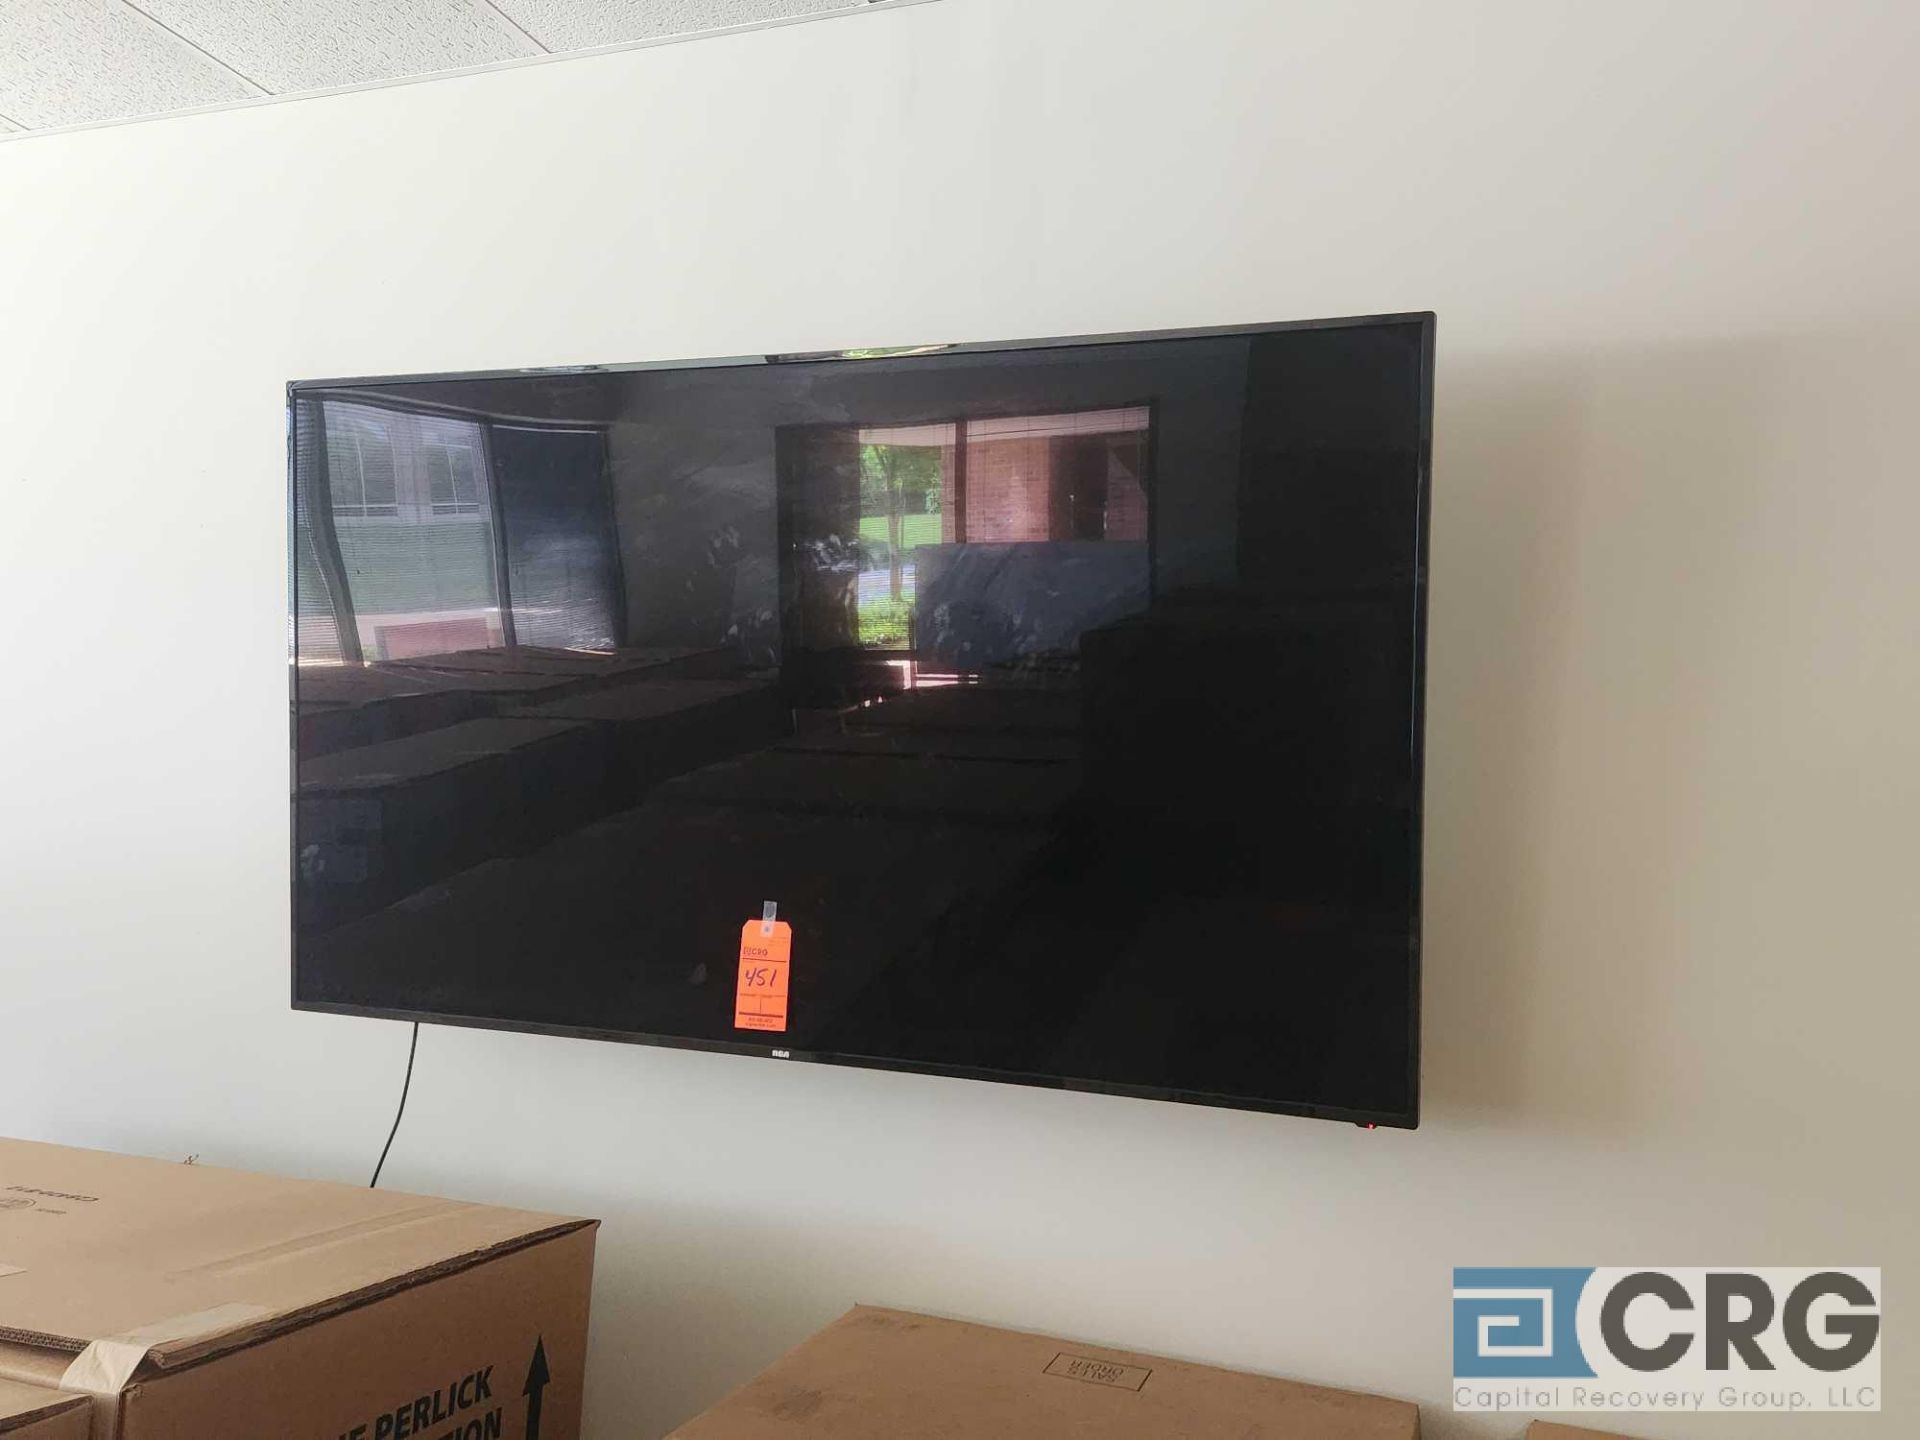 Rca 70 Inch Flat-Screen TV